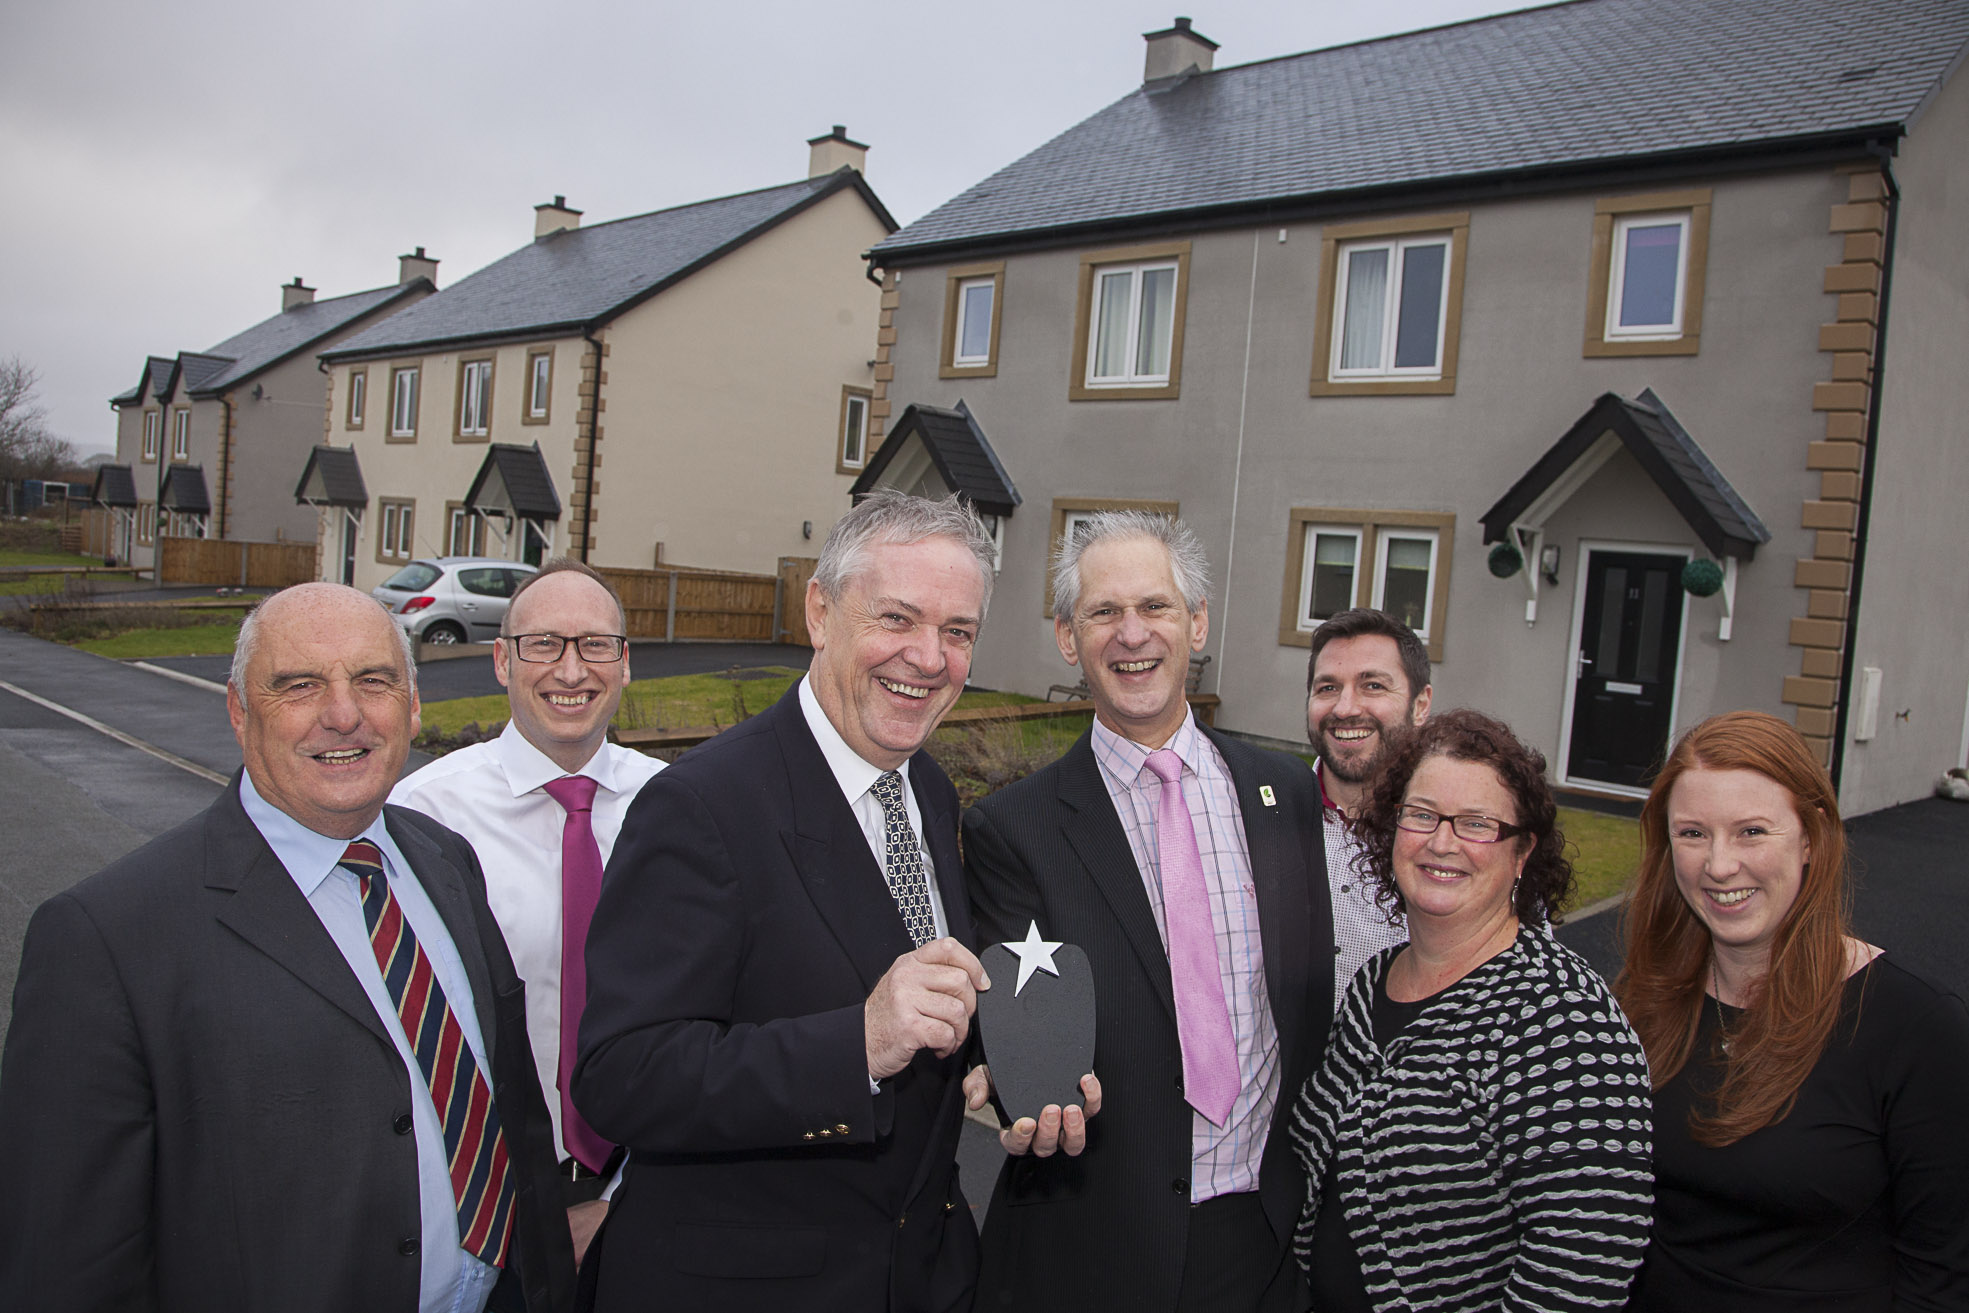 Award for housing scheme breathing new life into Snowdonia village